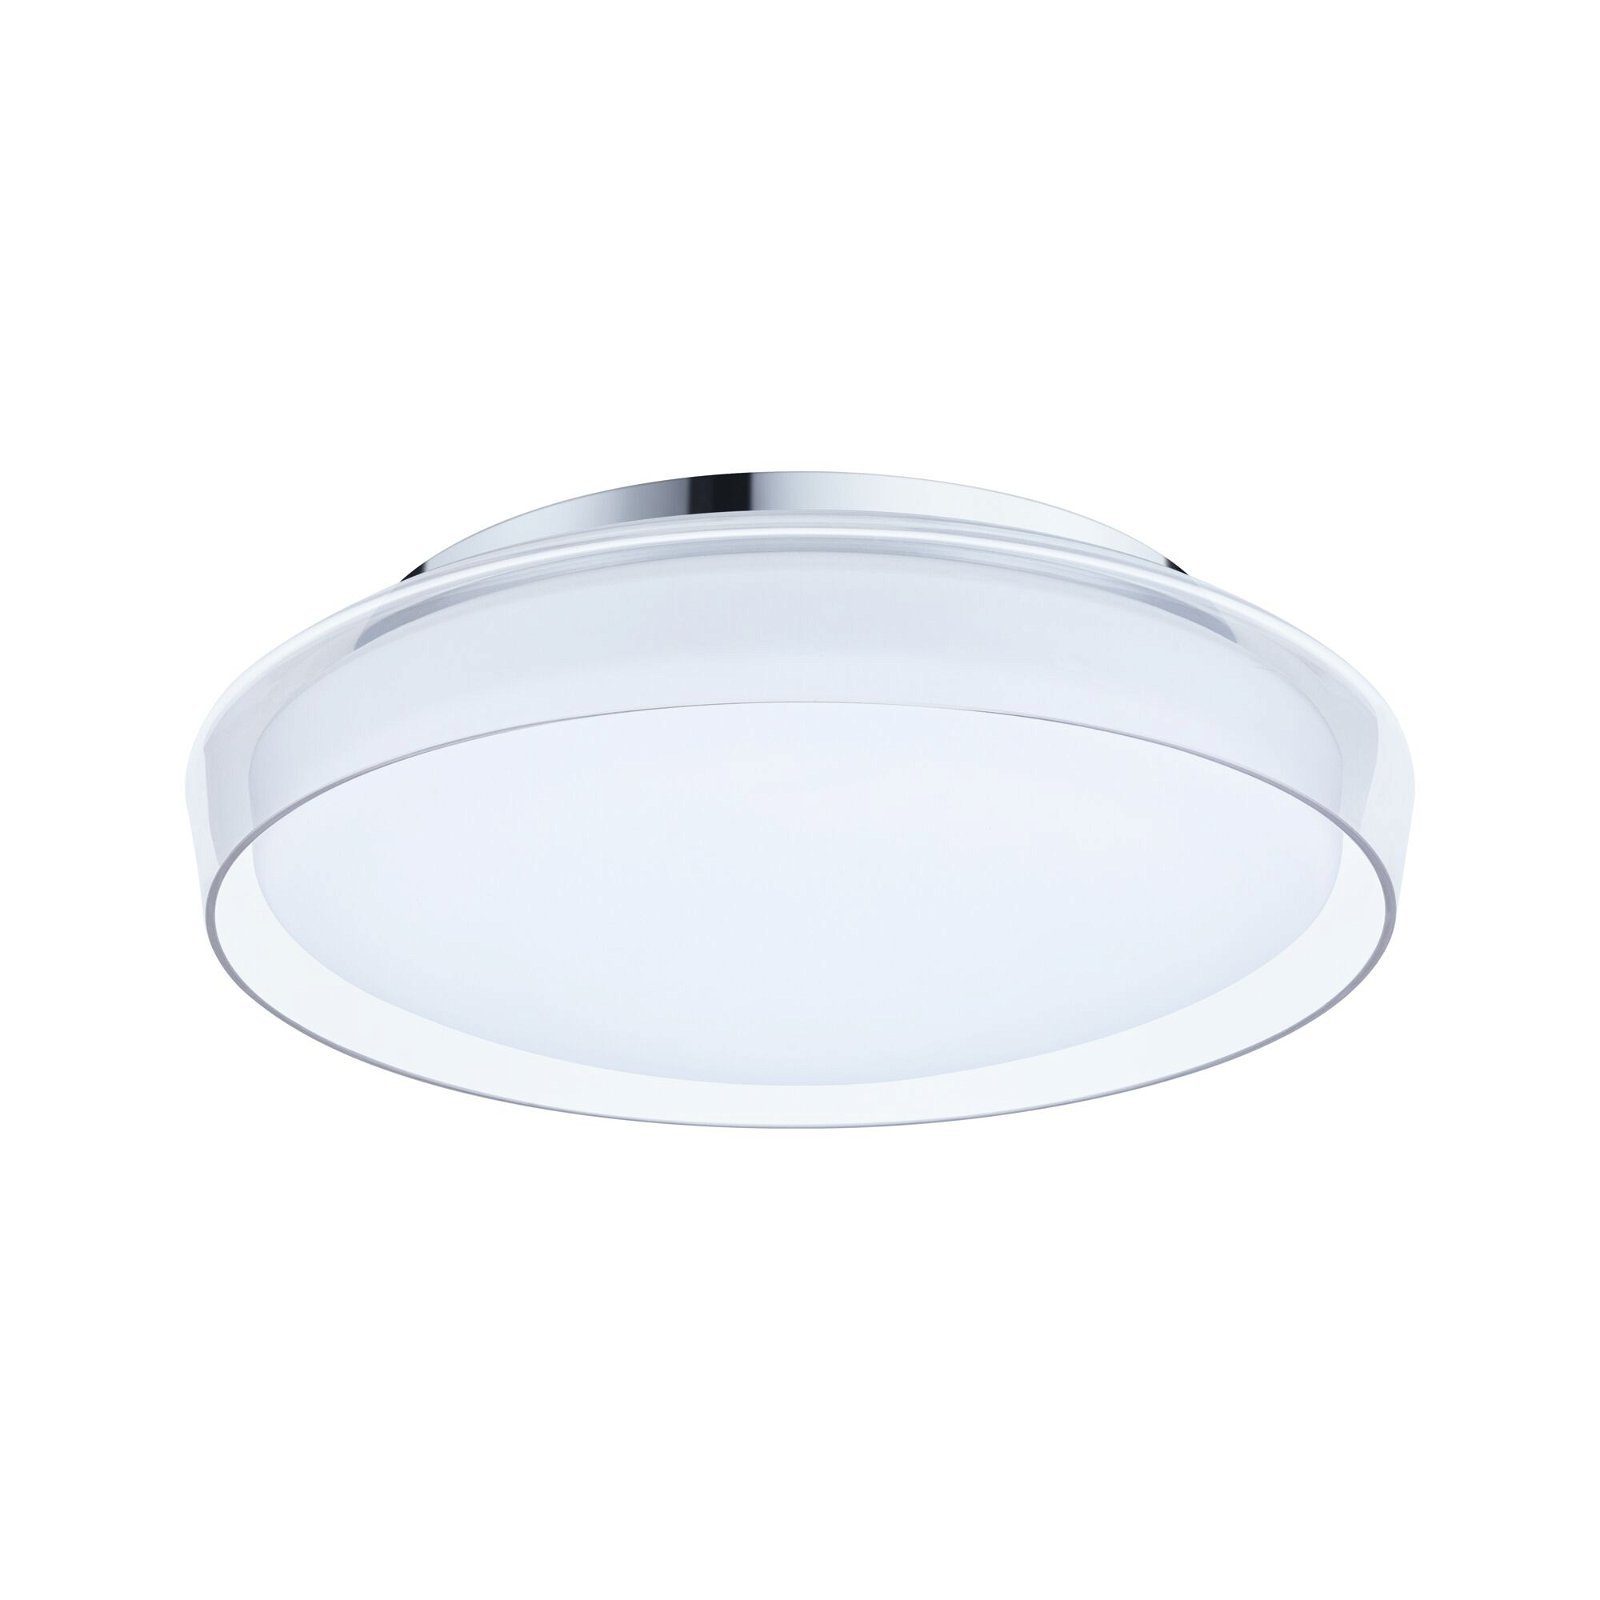 Paulmann LED Deckenleuchte Warmweiß IP44 Bathroom Selection 3000K LED Glas/Metall, 16,5W integriert, Chrom 230V Luena fest